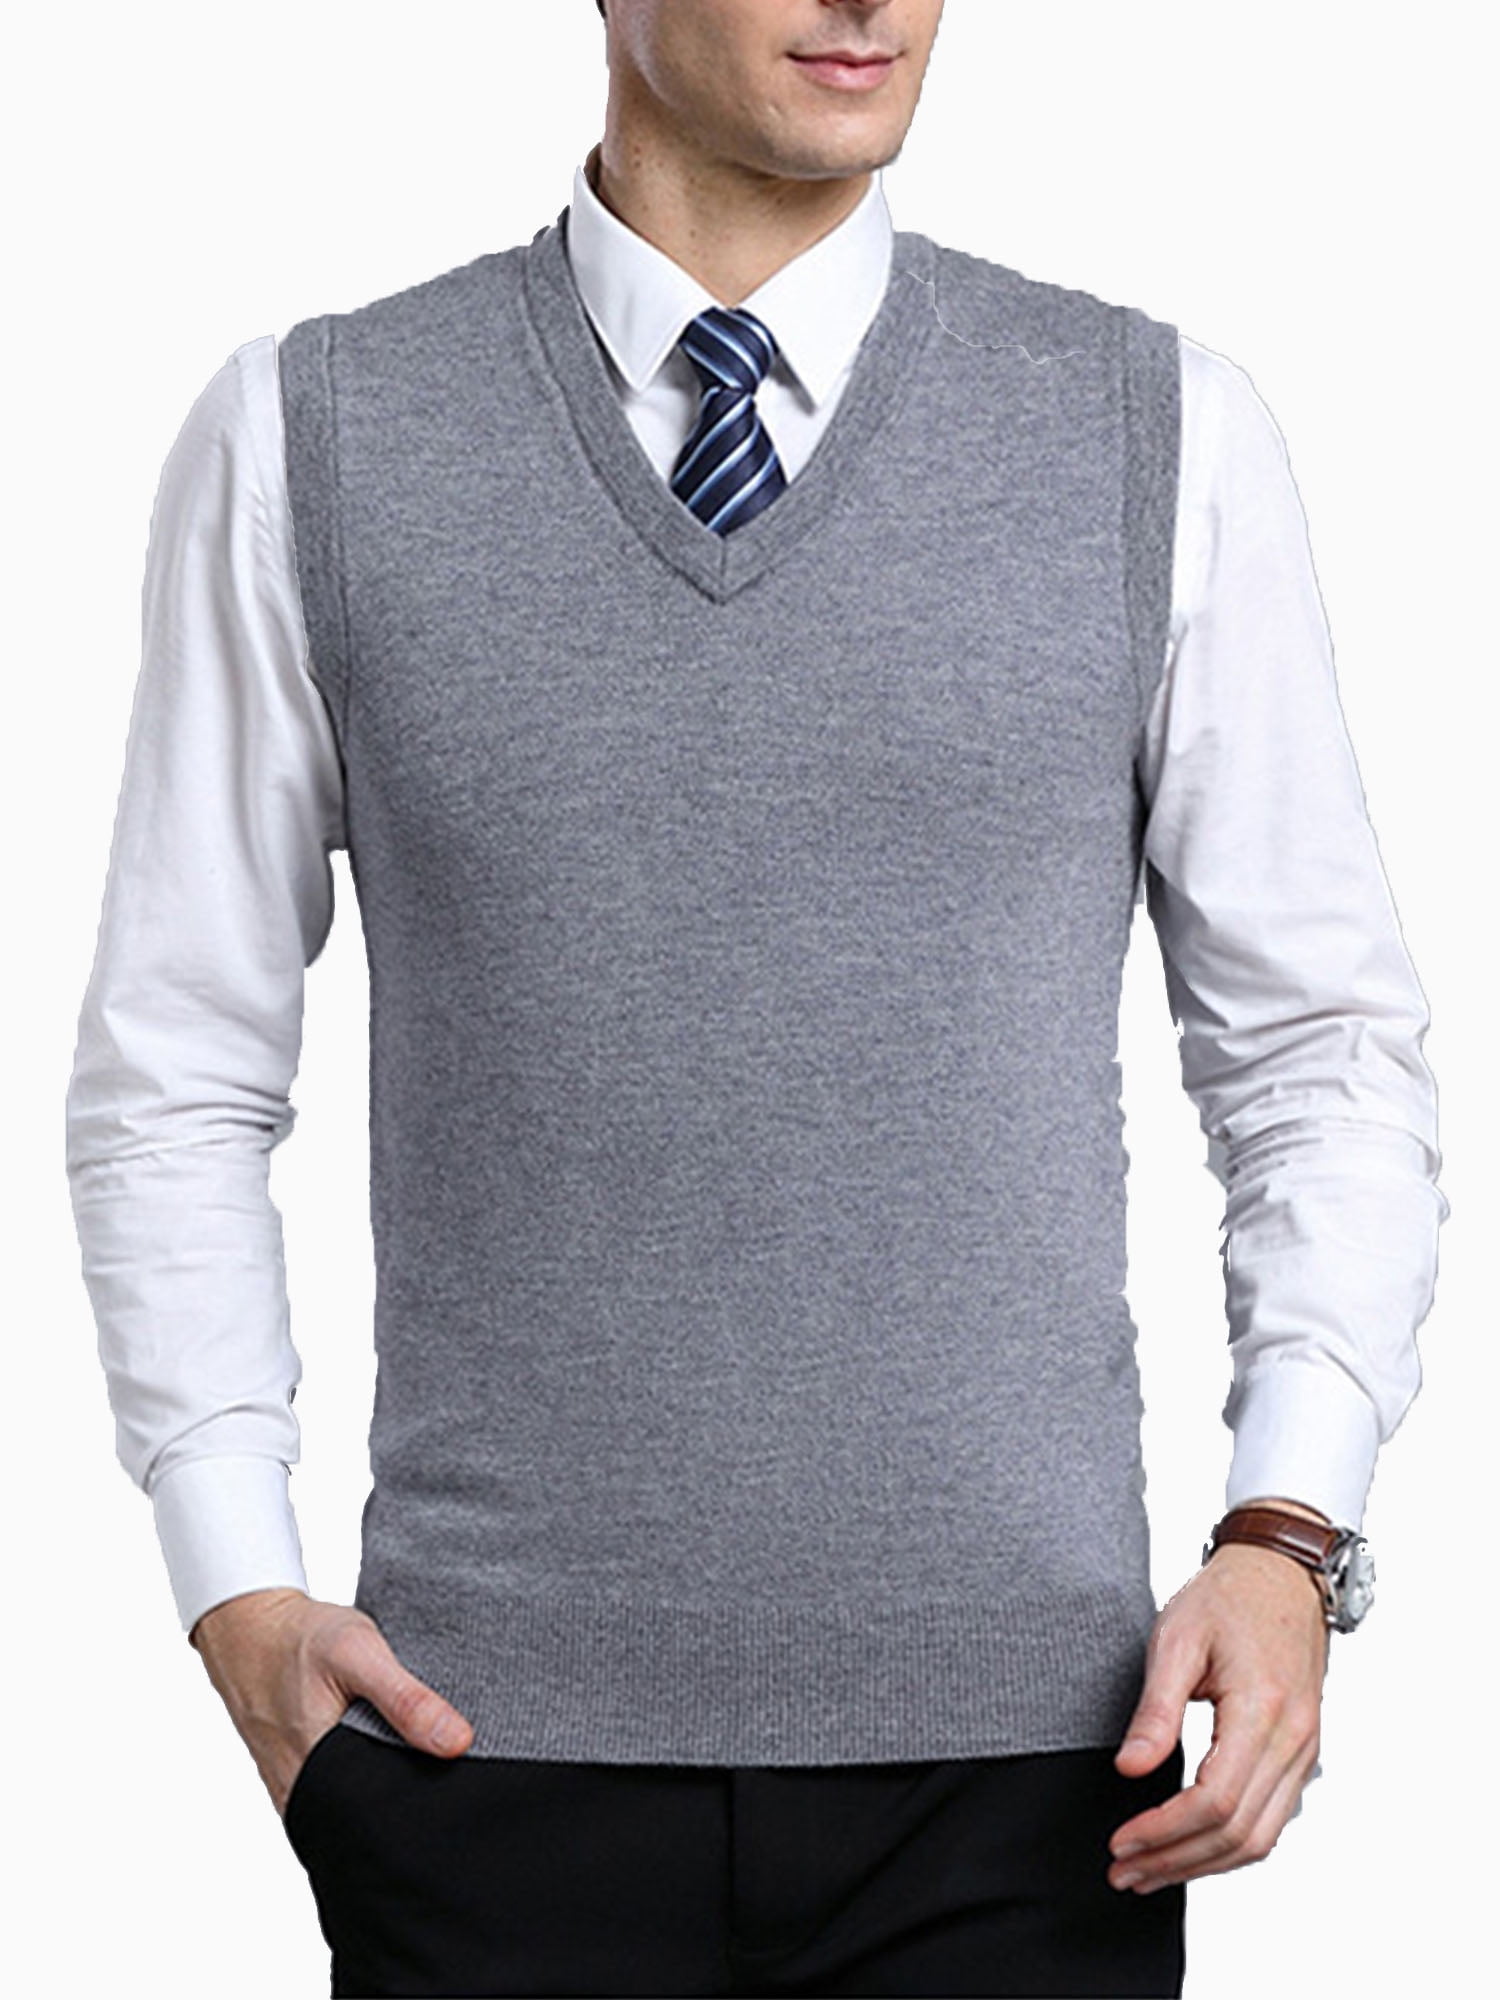 WAWAYA Mens Knit Crewneck Slim Fit Casual Long Sleeve Contrast Pullover Sweater 